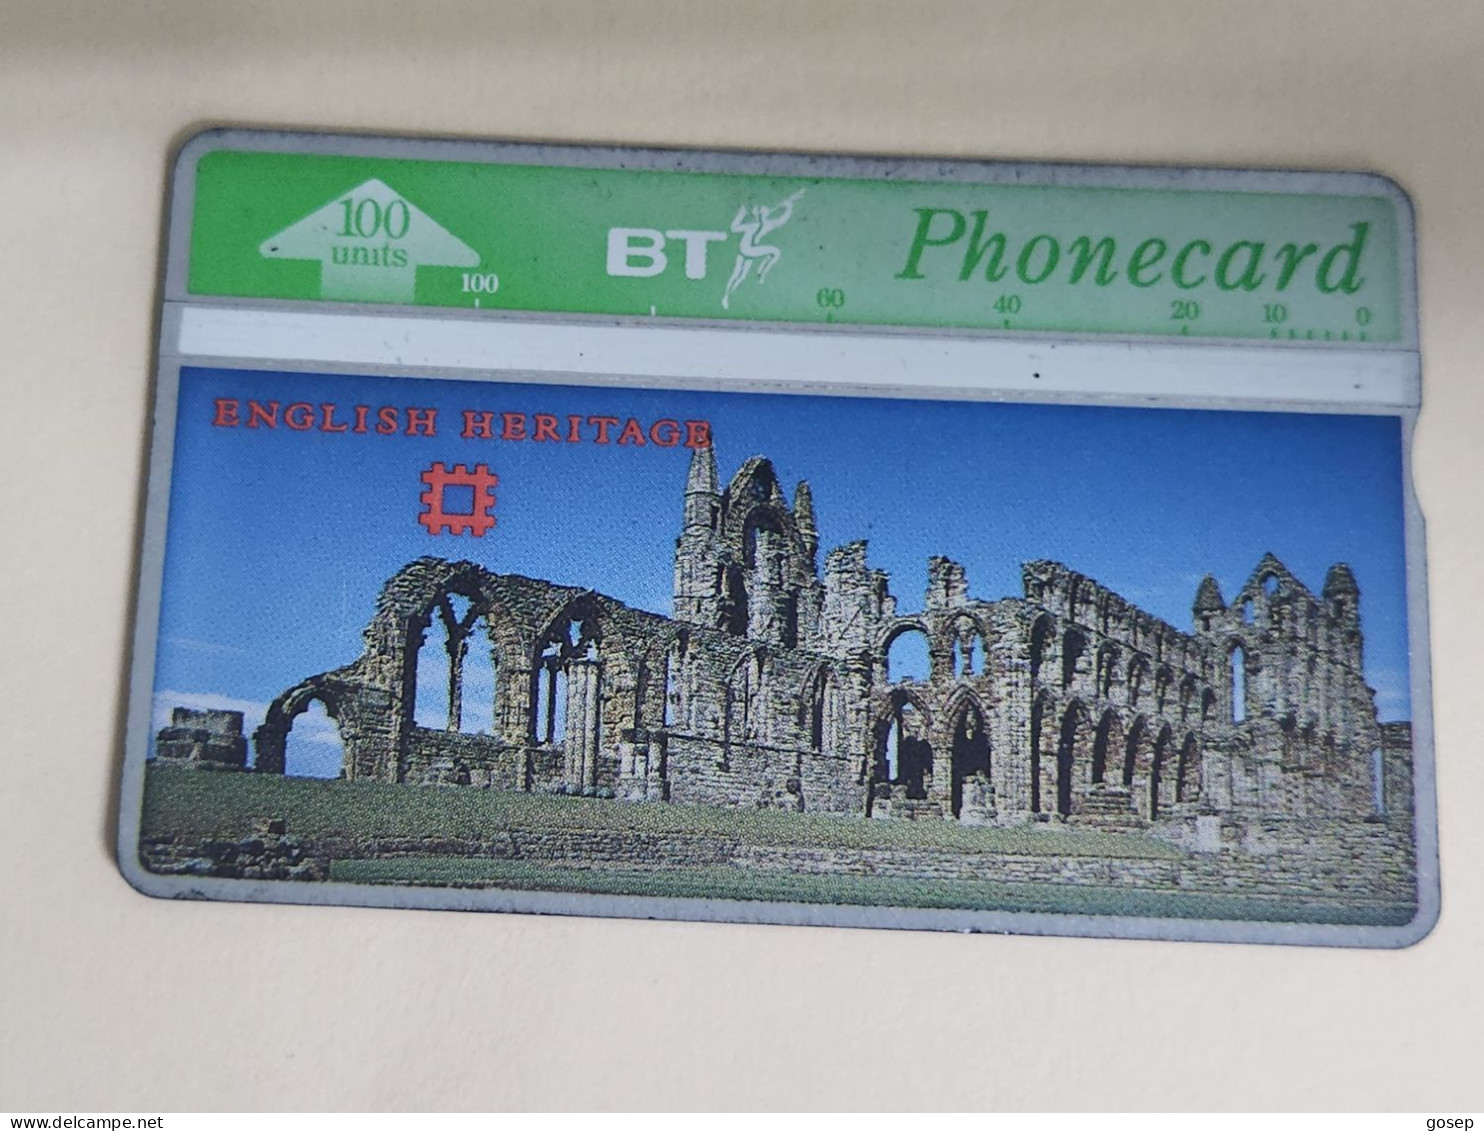 United Kingdom-(BTA122)-HERITAGE-Whitby Abbey-(217)(100units)(527H30198)price Cataloge3.00£-used+1card Prepiad Free - BT Edición Publicitaria